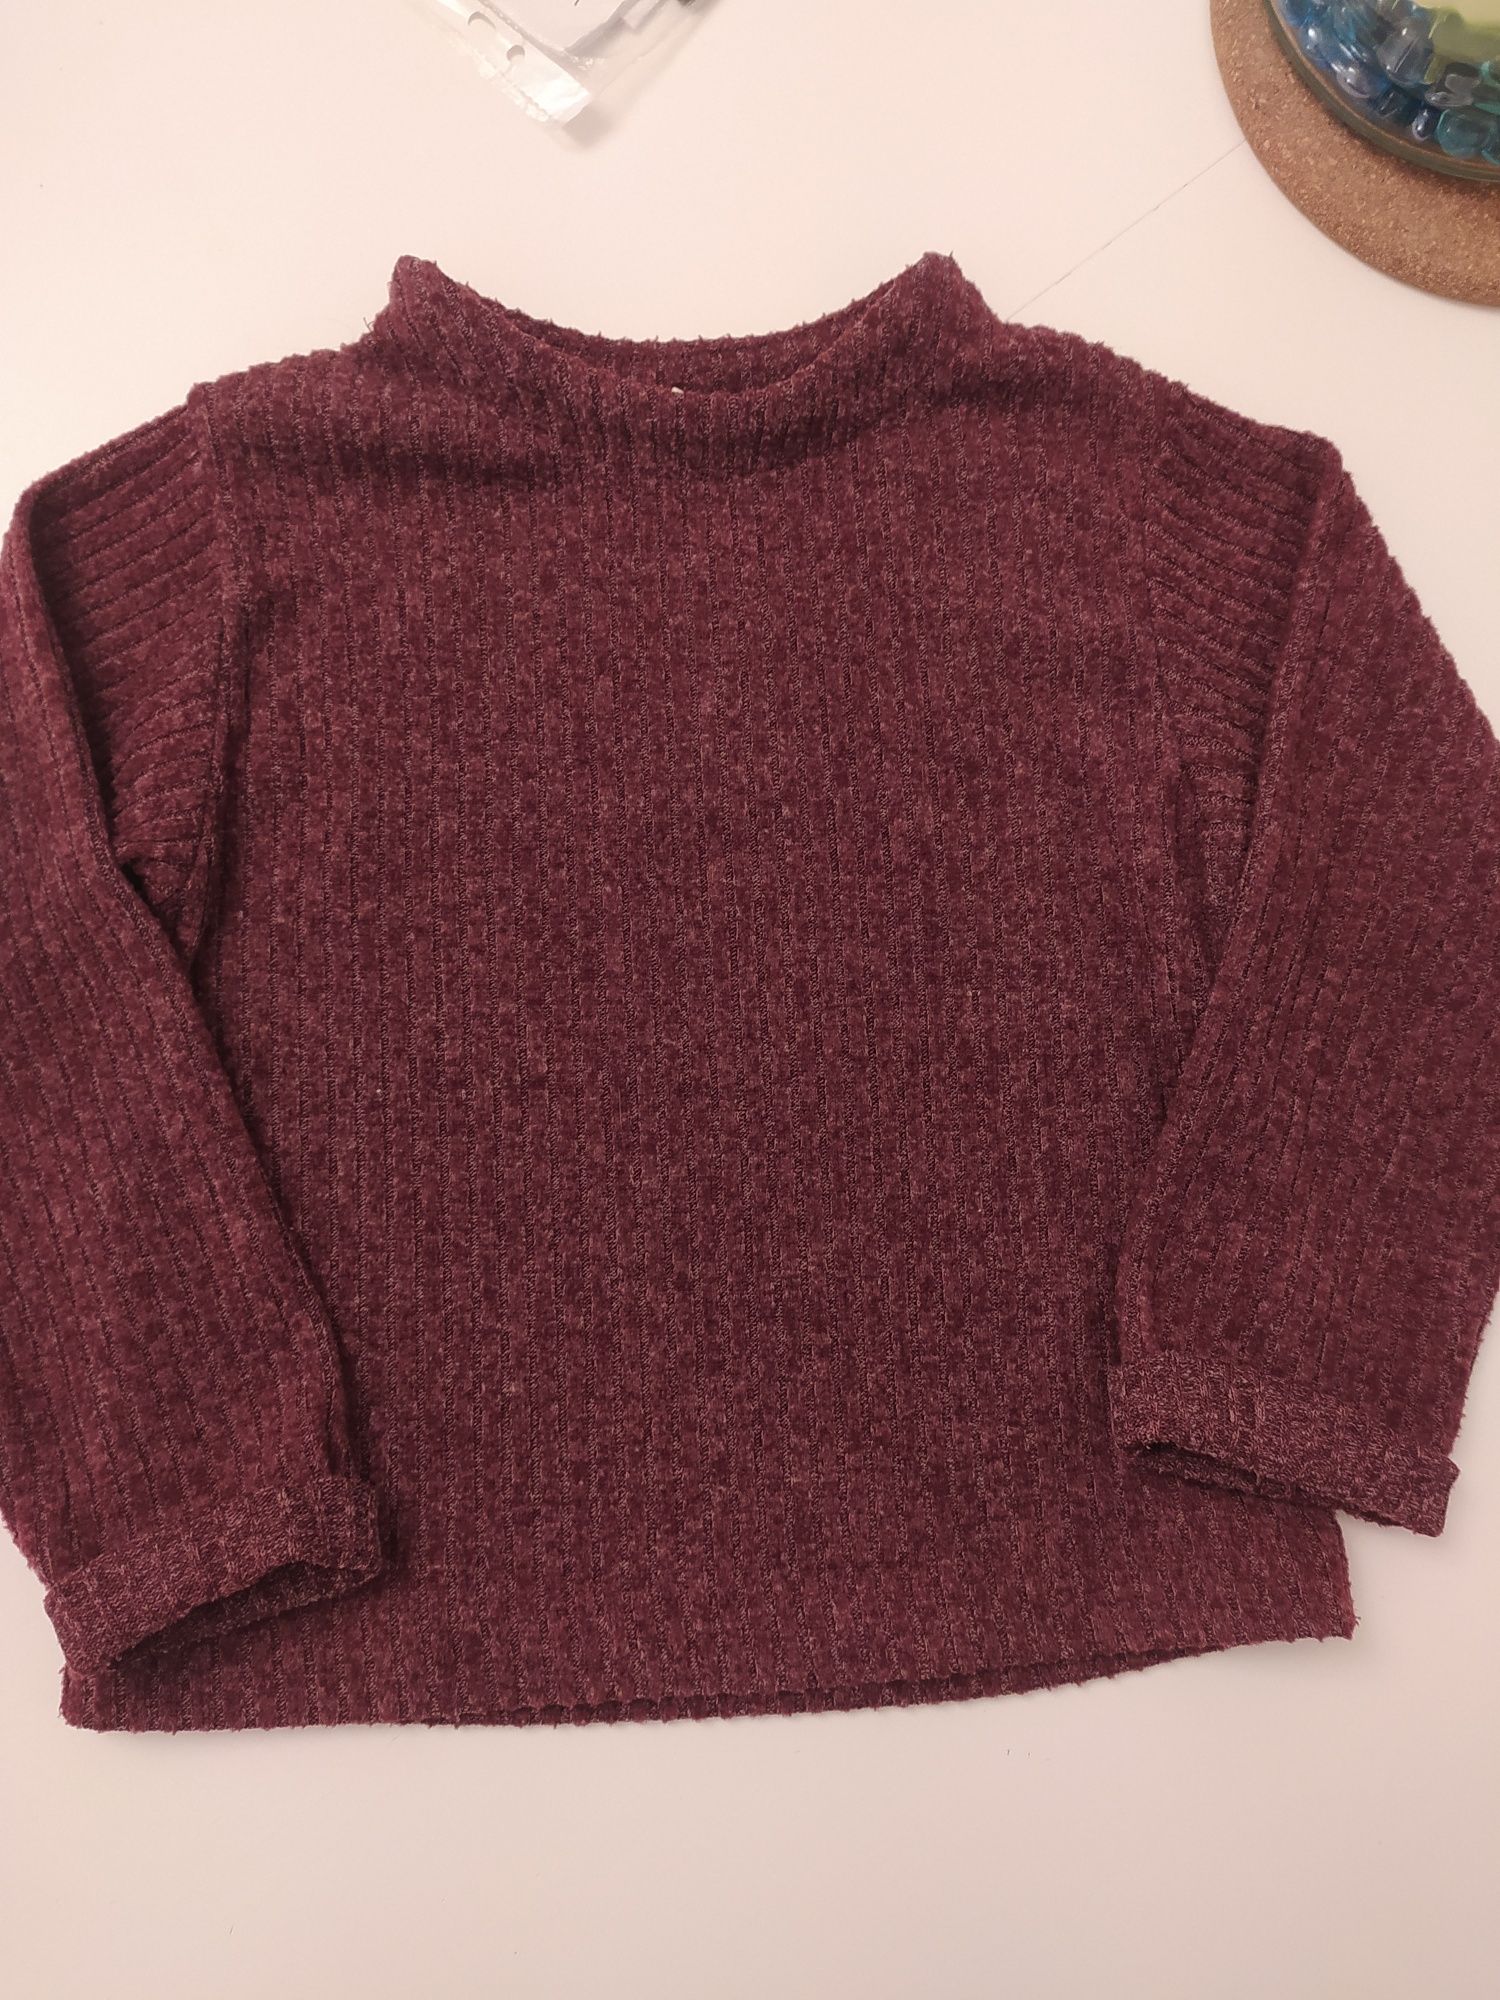 Sweterek prazkowany Zara 116